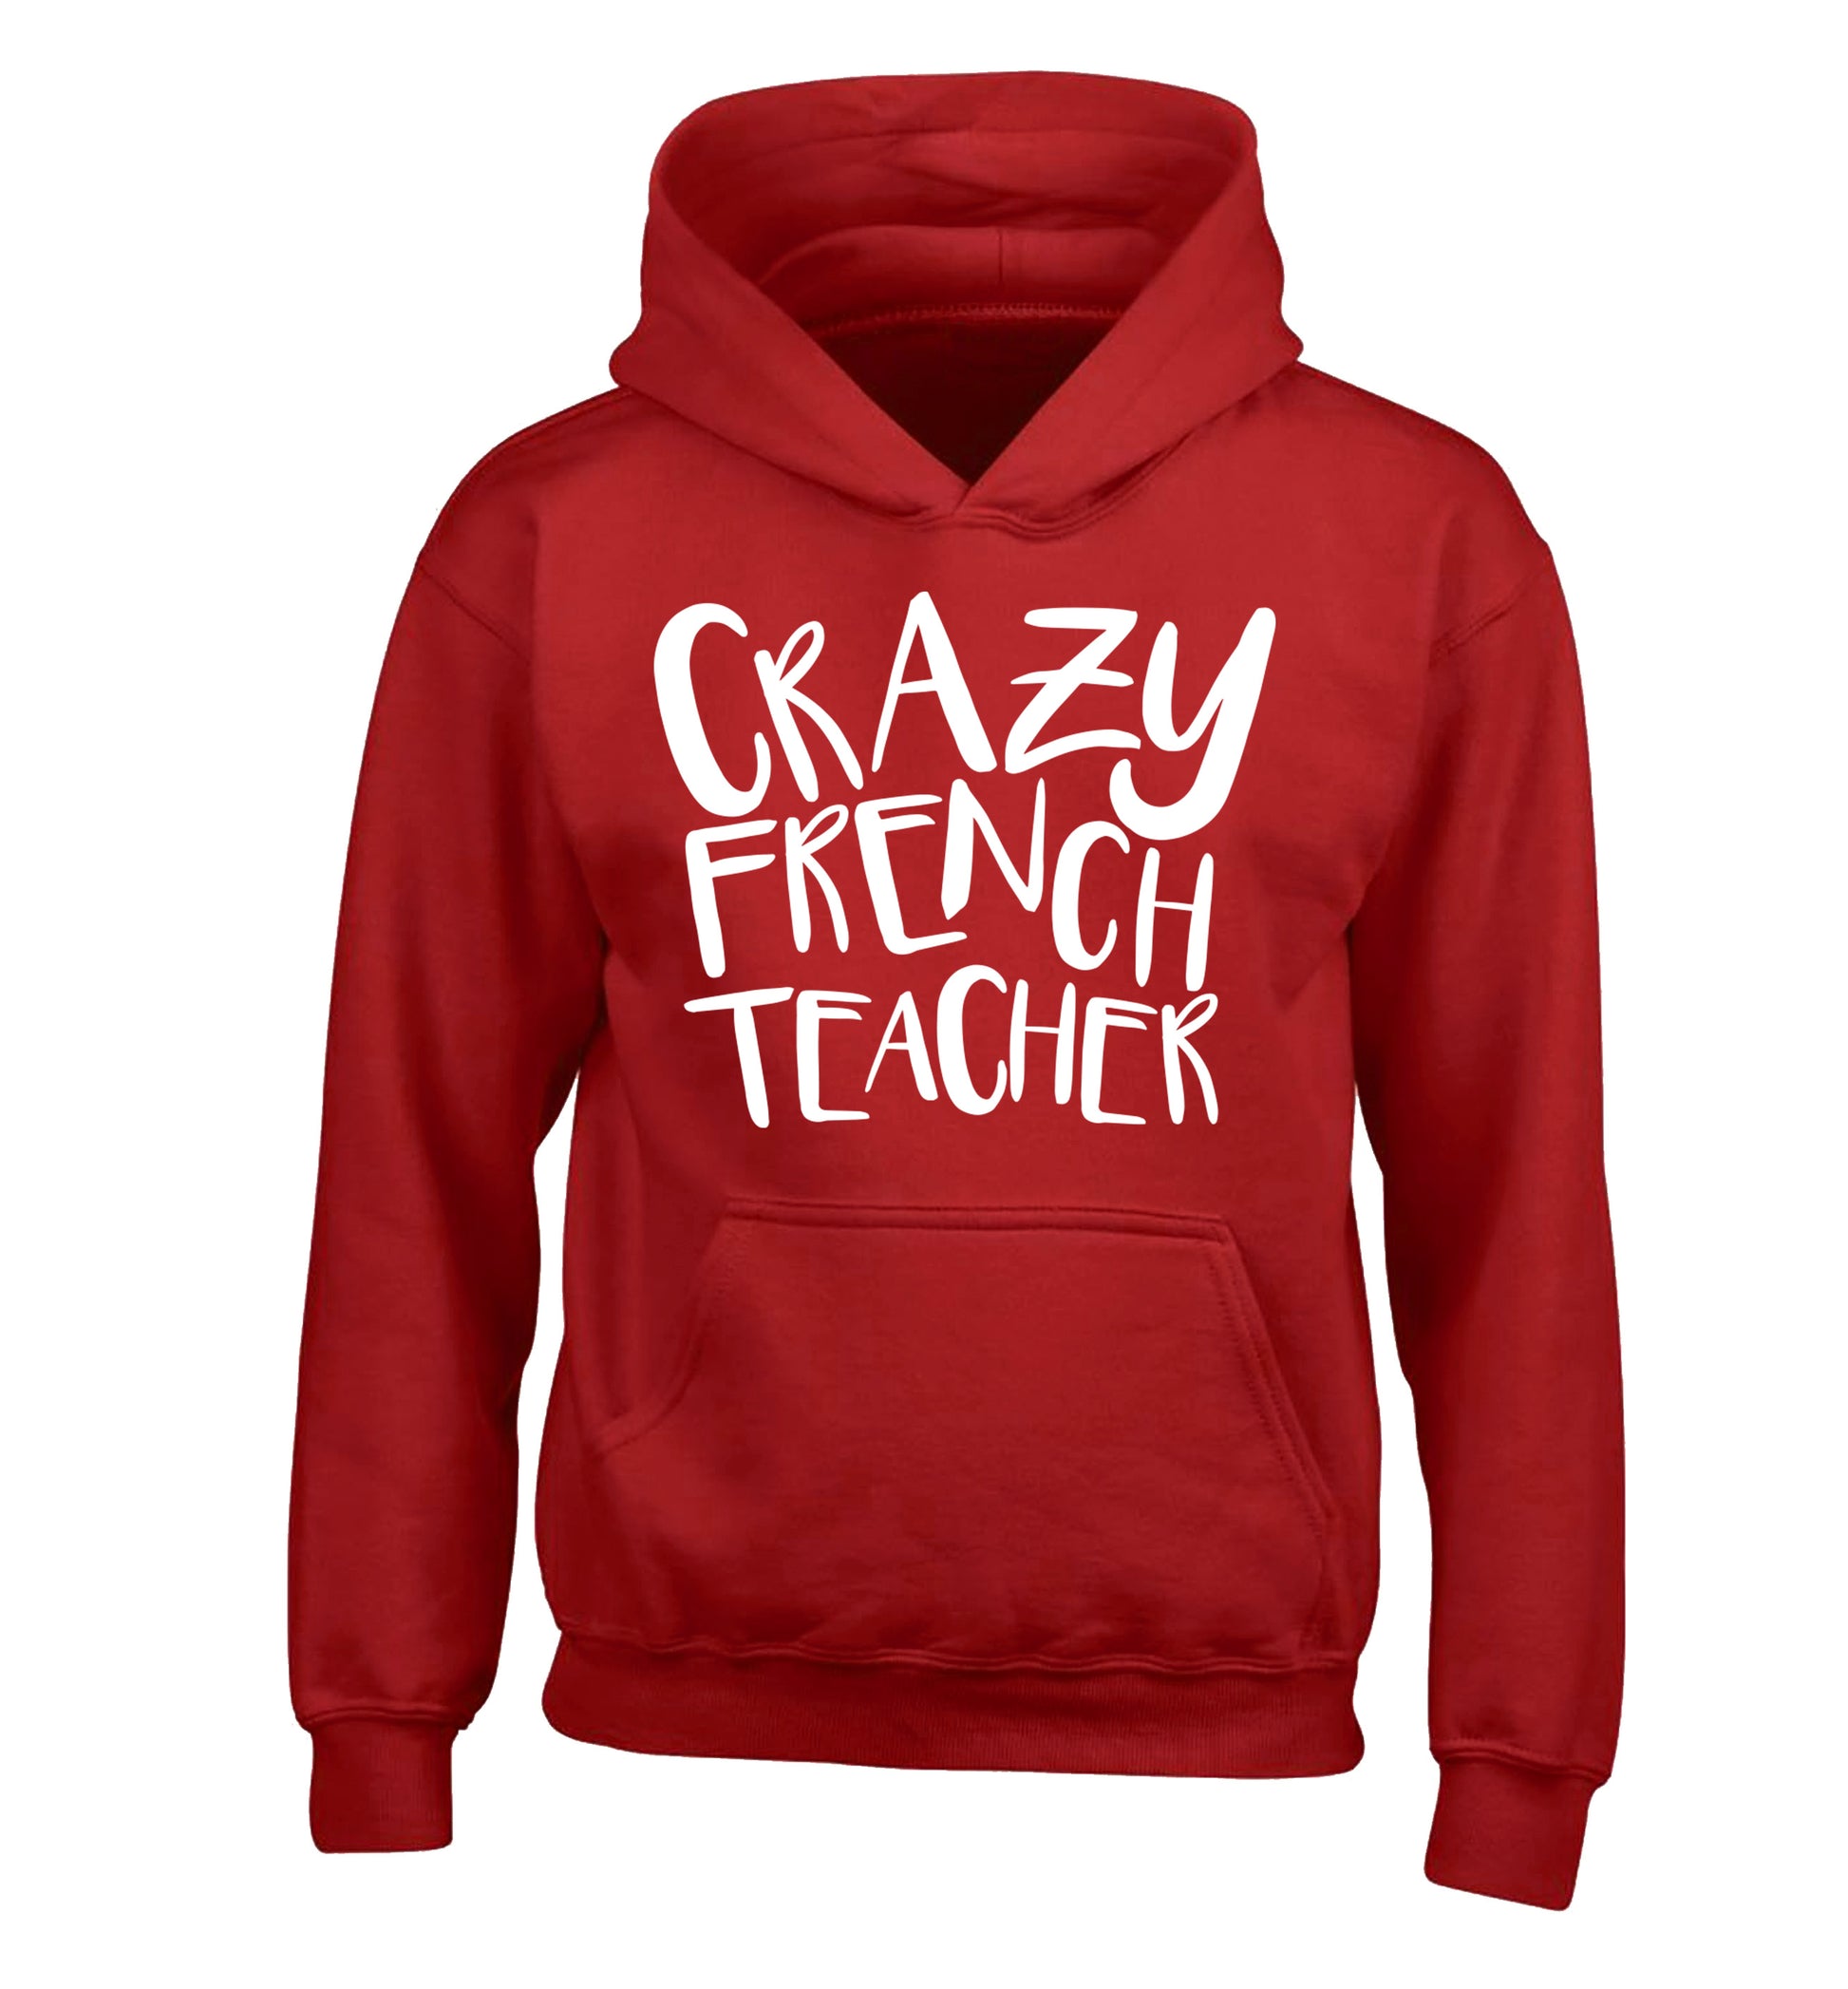 Crazy french teacher children's red hoodie 12-13 Years